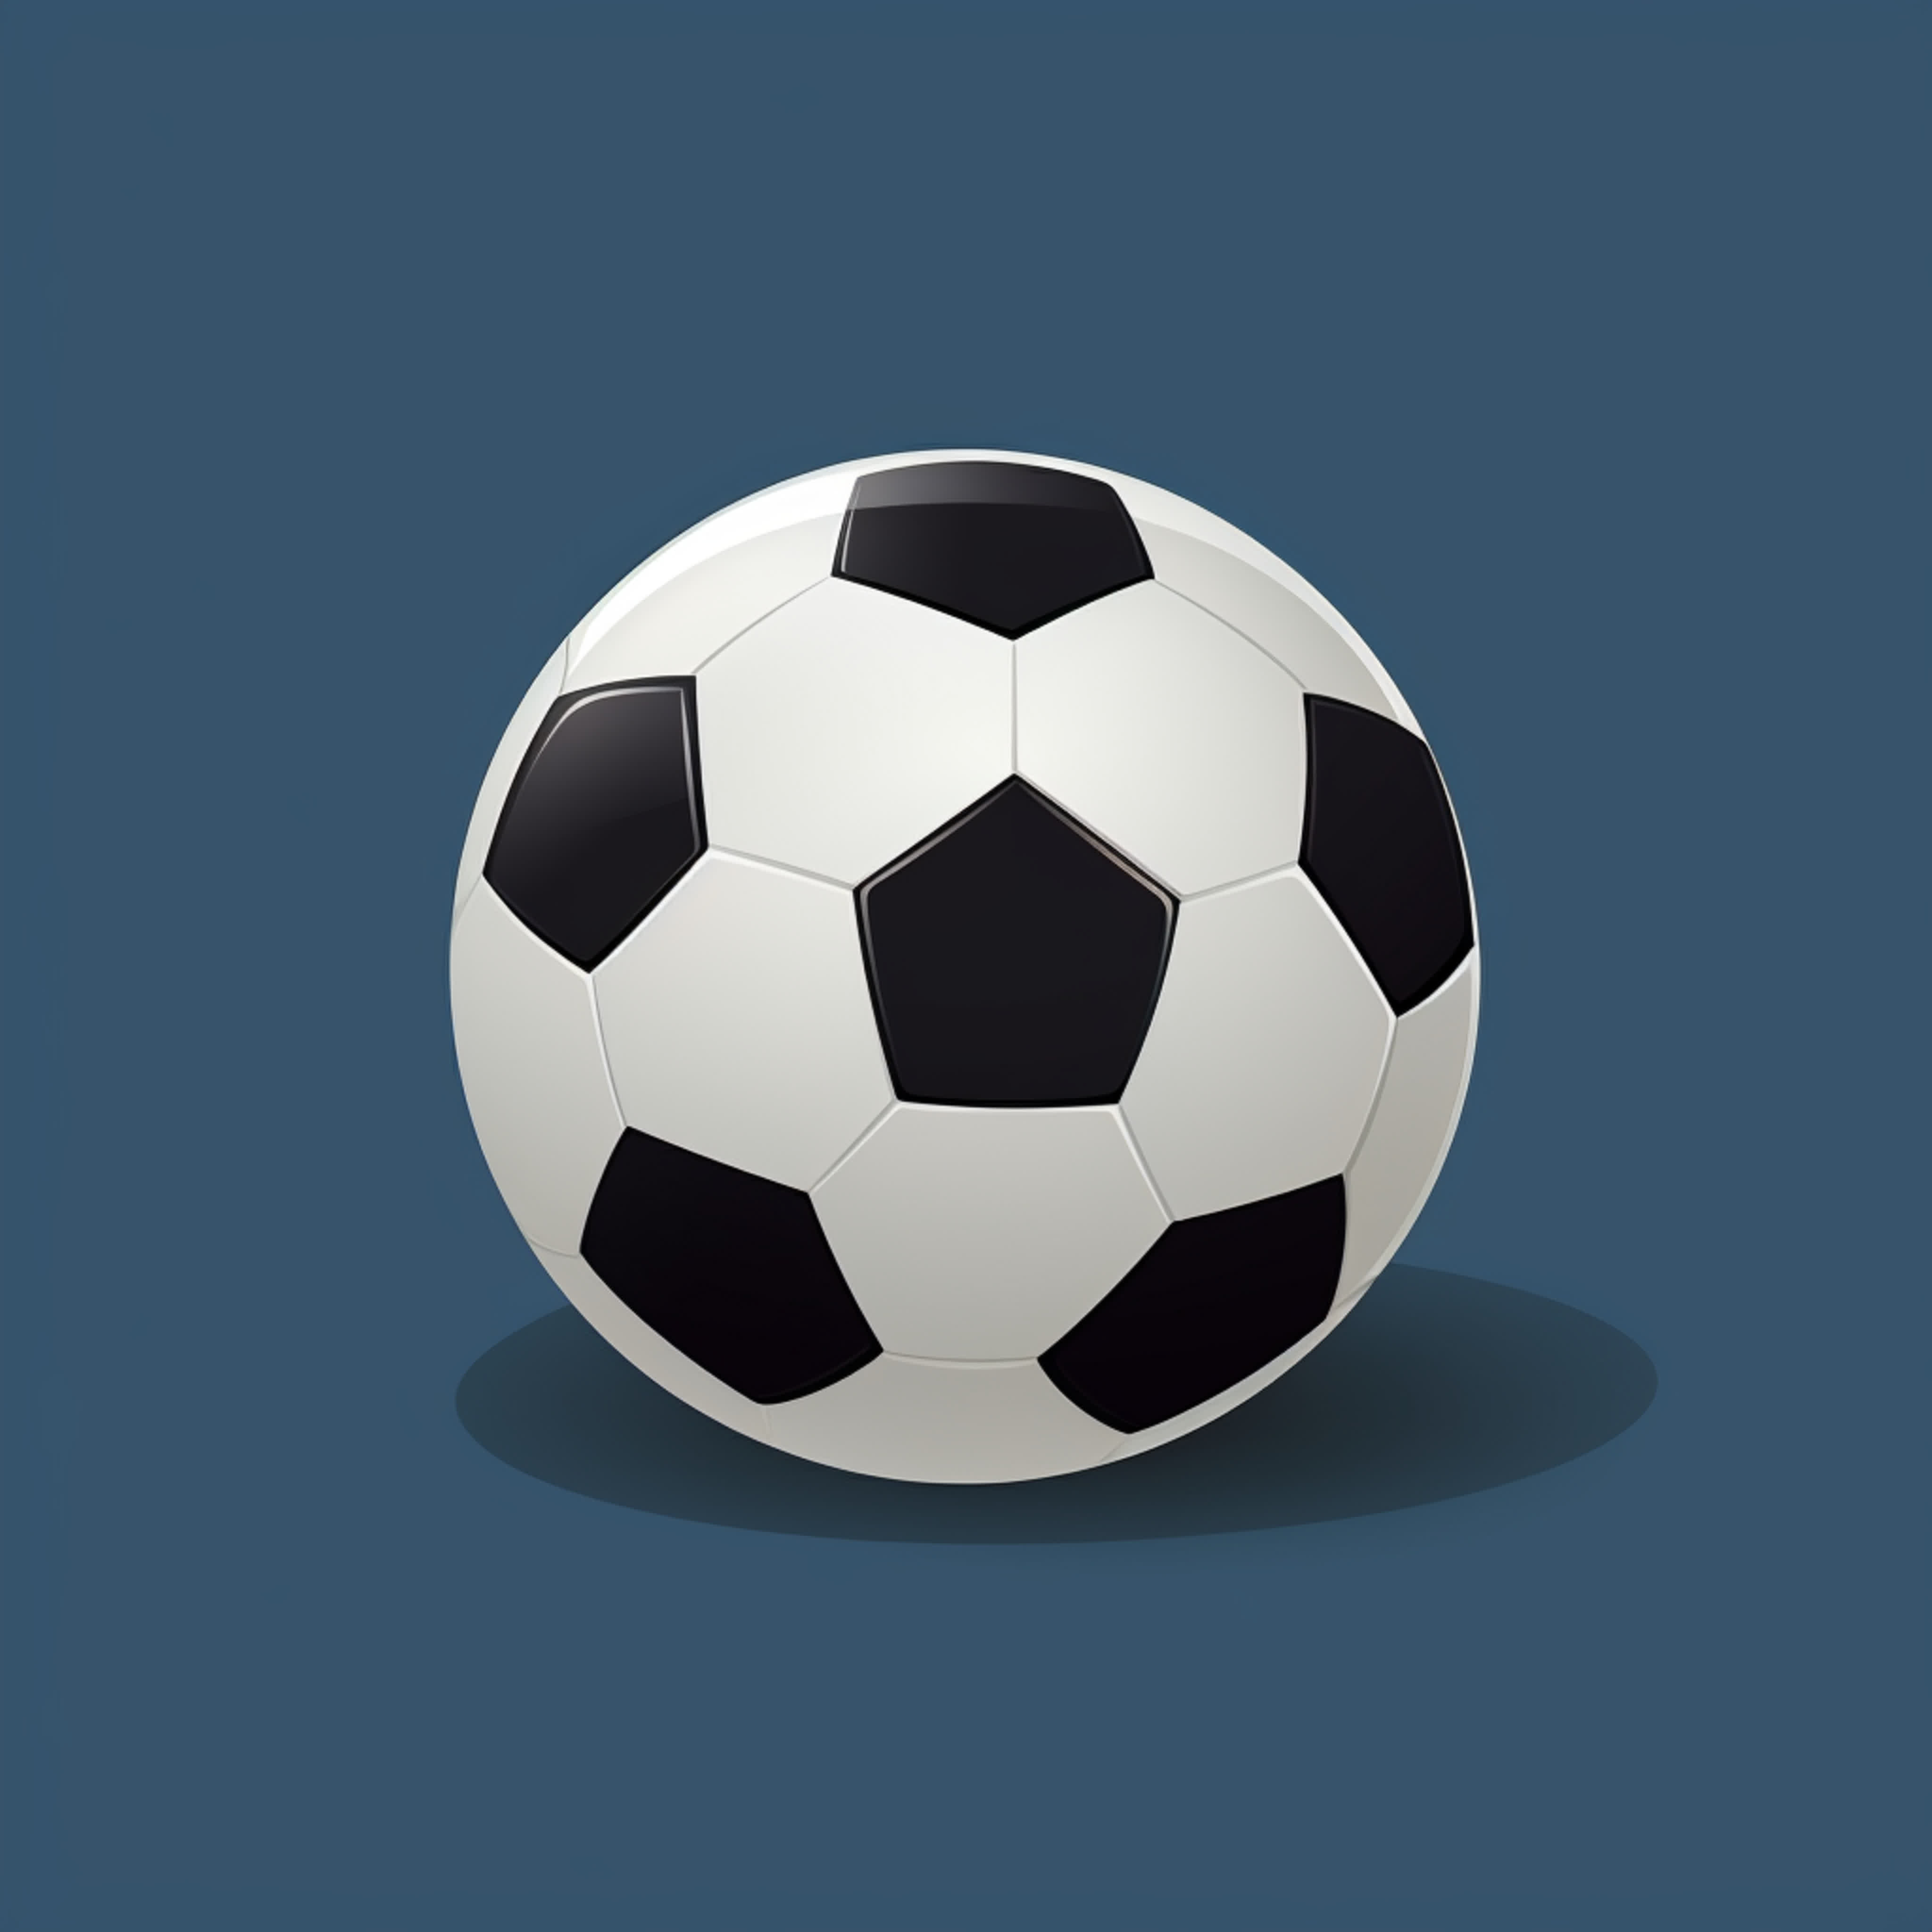 v3ri4 m4i m41nd minimalistic 2d soccer ball icon 11c32a0f 2c2a 4cce 8052 b813642bca3e 279